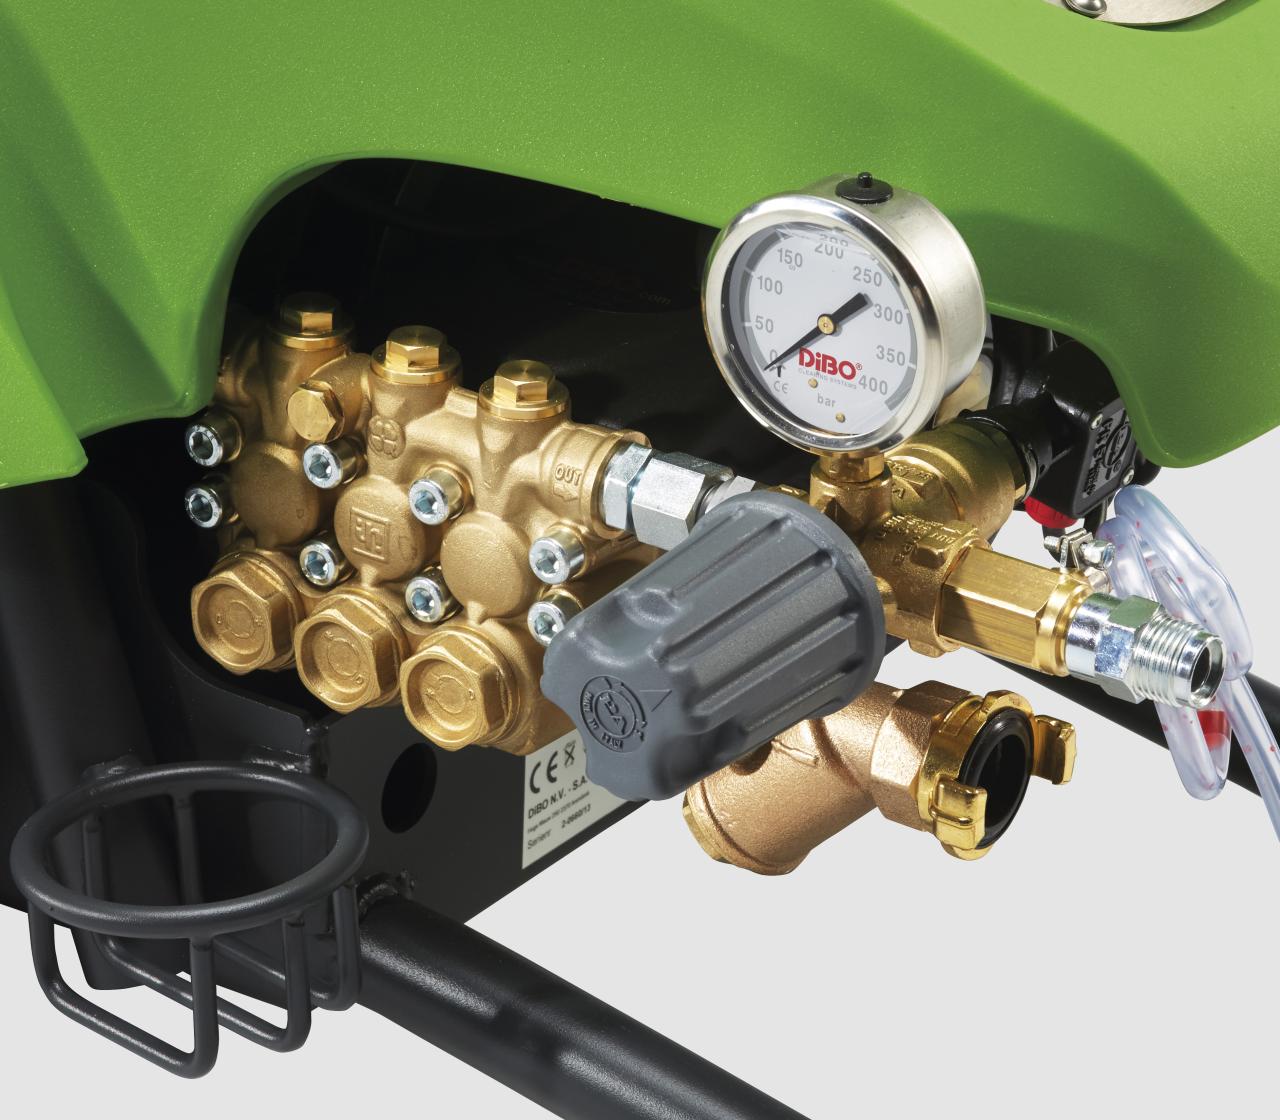 DiBO cold water high pressure cleaner - high pressure pump